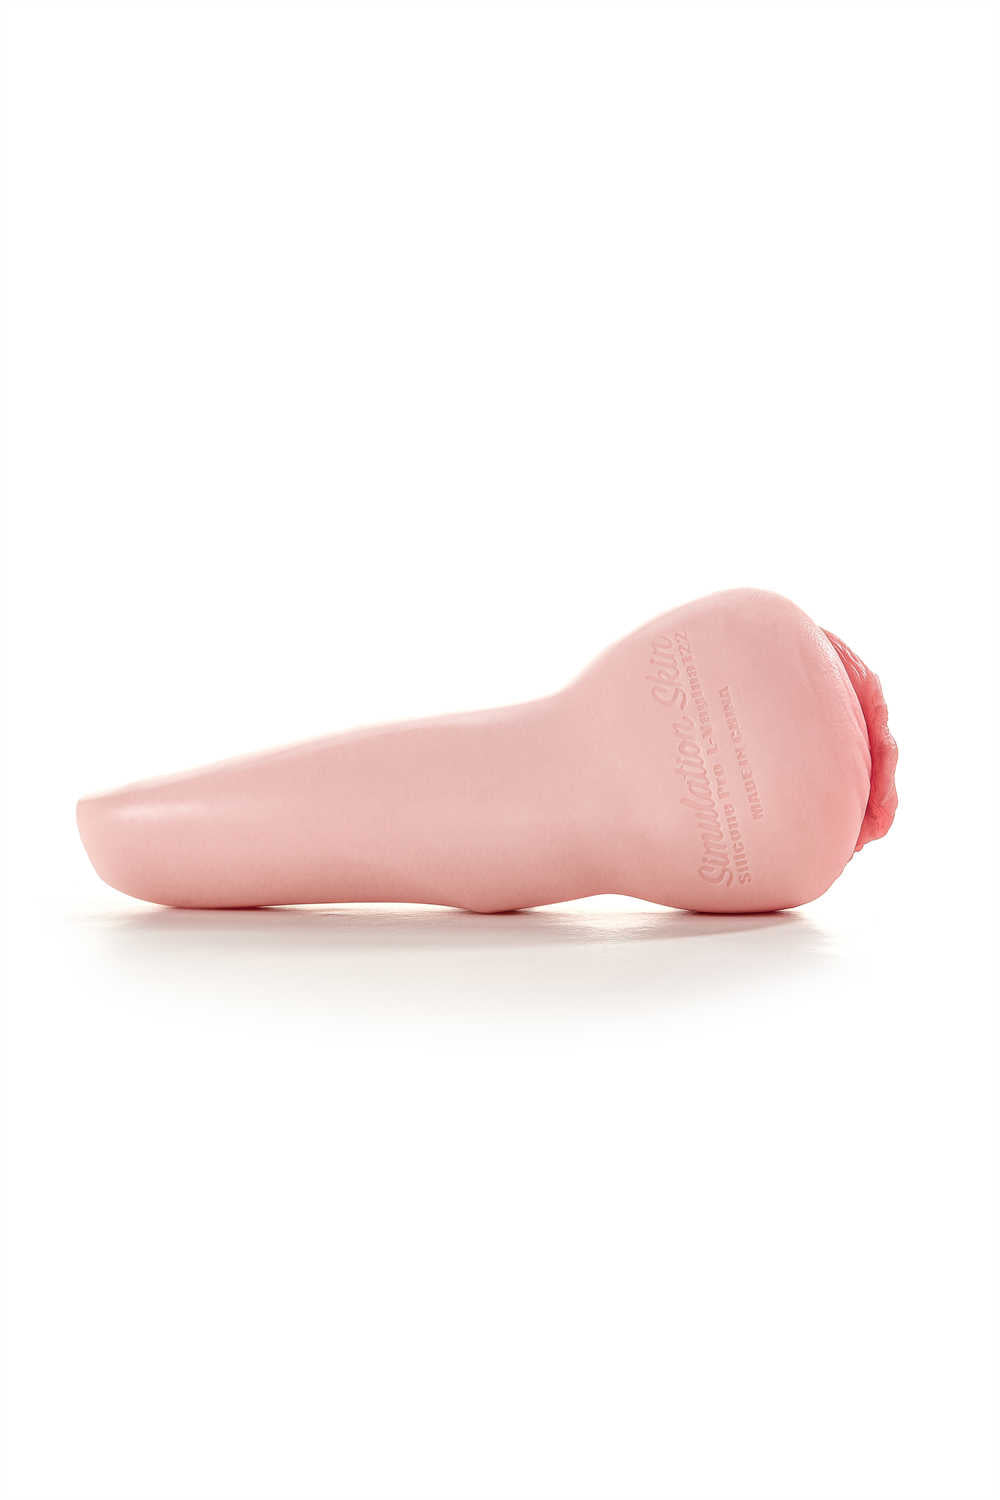 Silicone Realistic Masturbation Cup Vagina 122